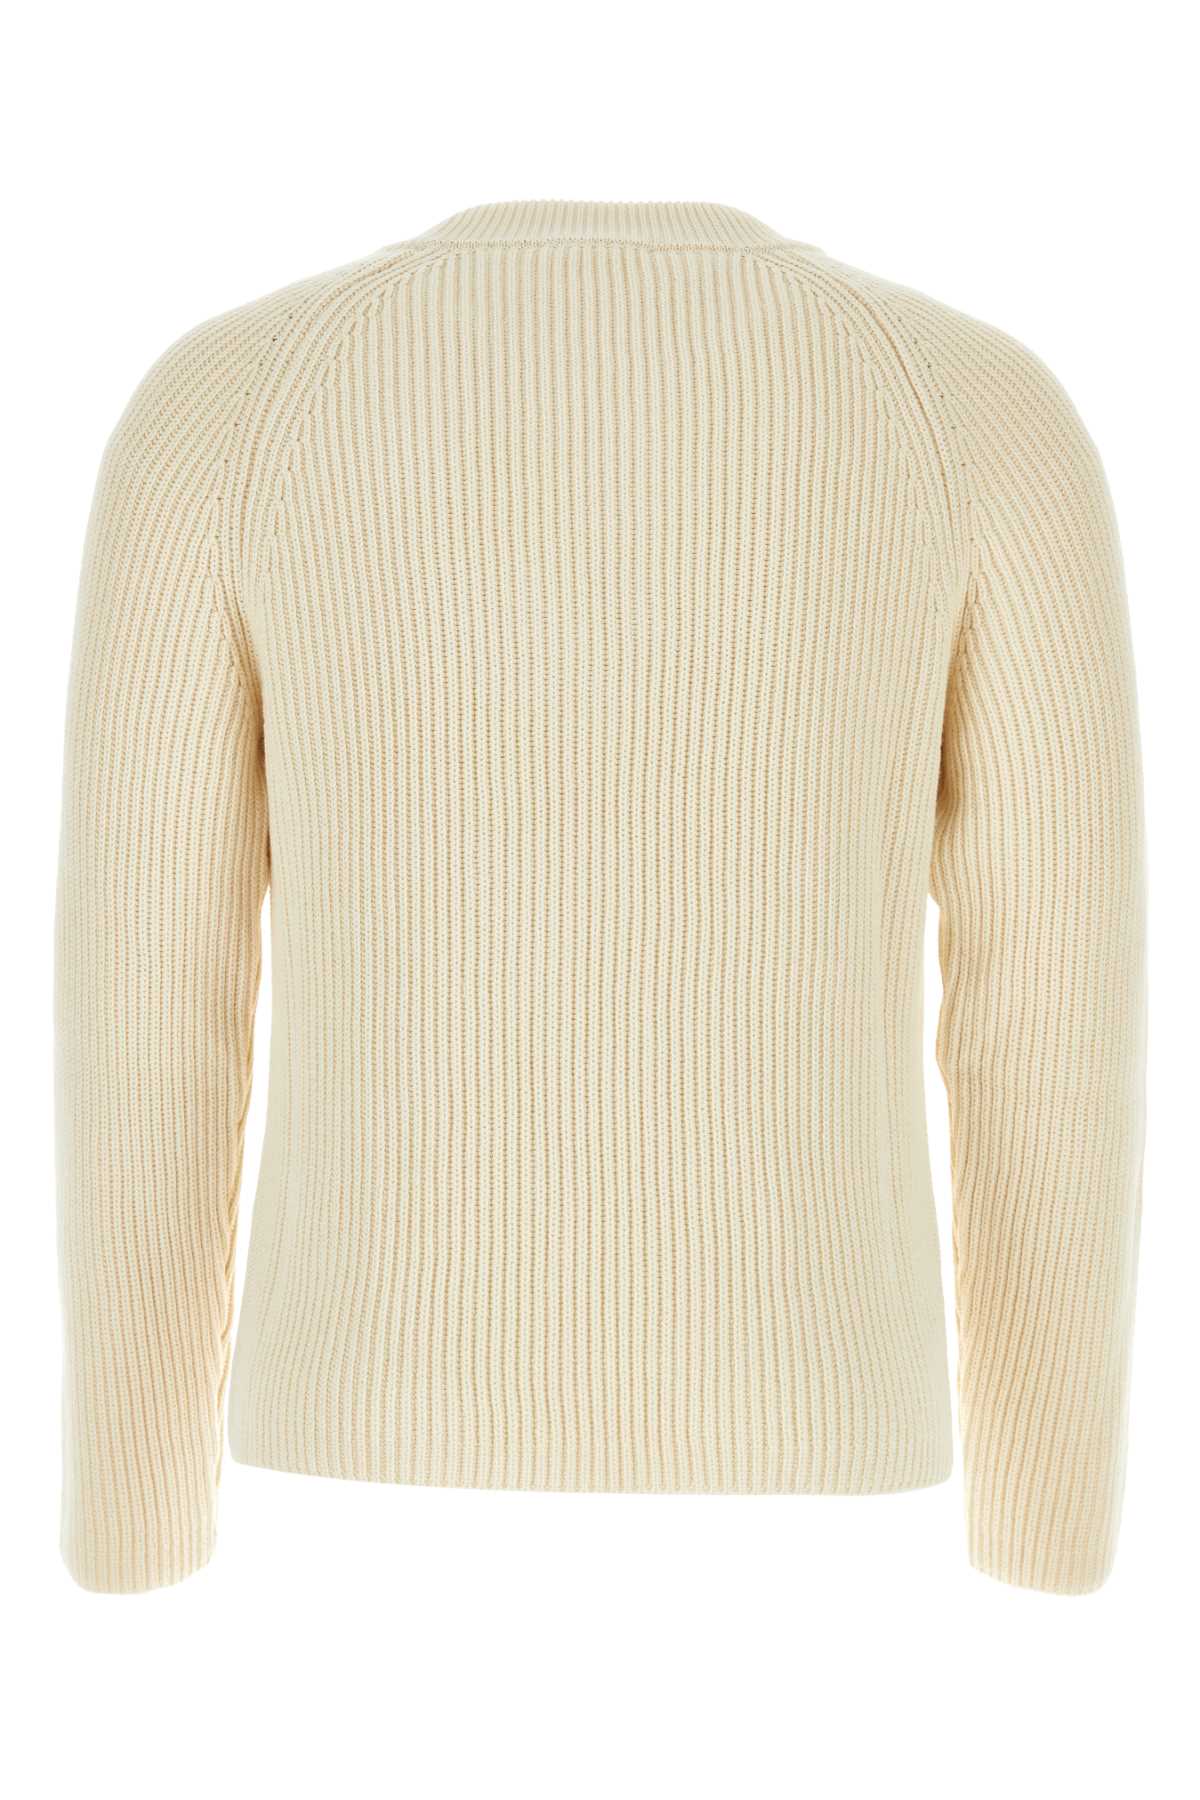 Ami Alexandre Mattiussi Ivory Cotton Blend Sweater